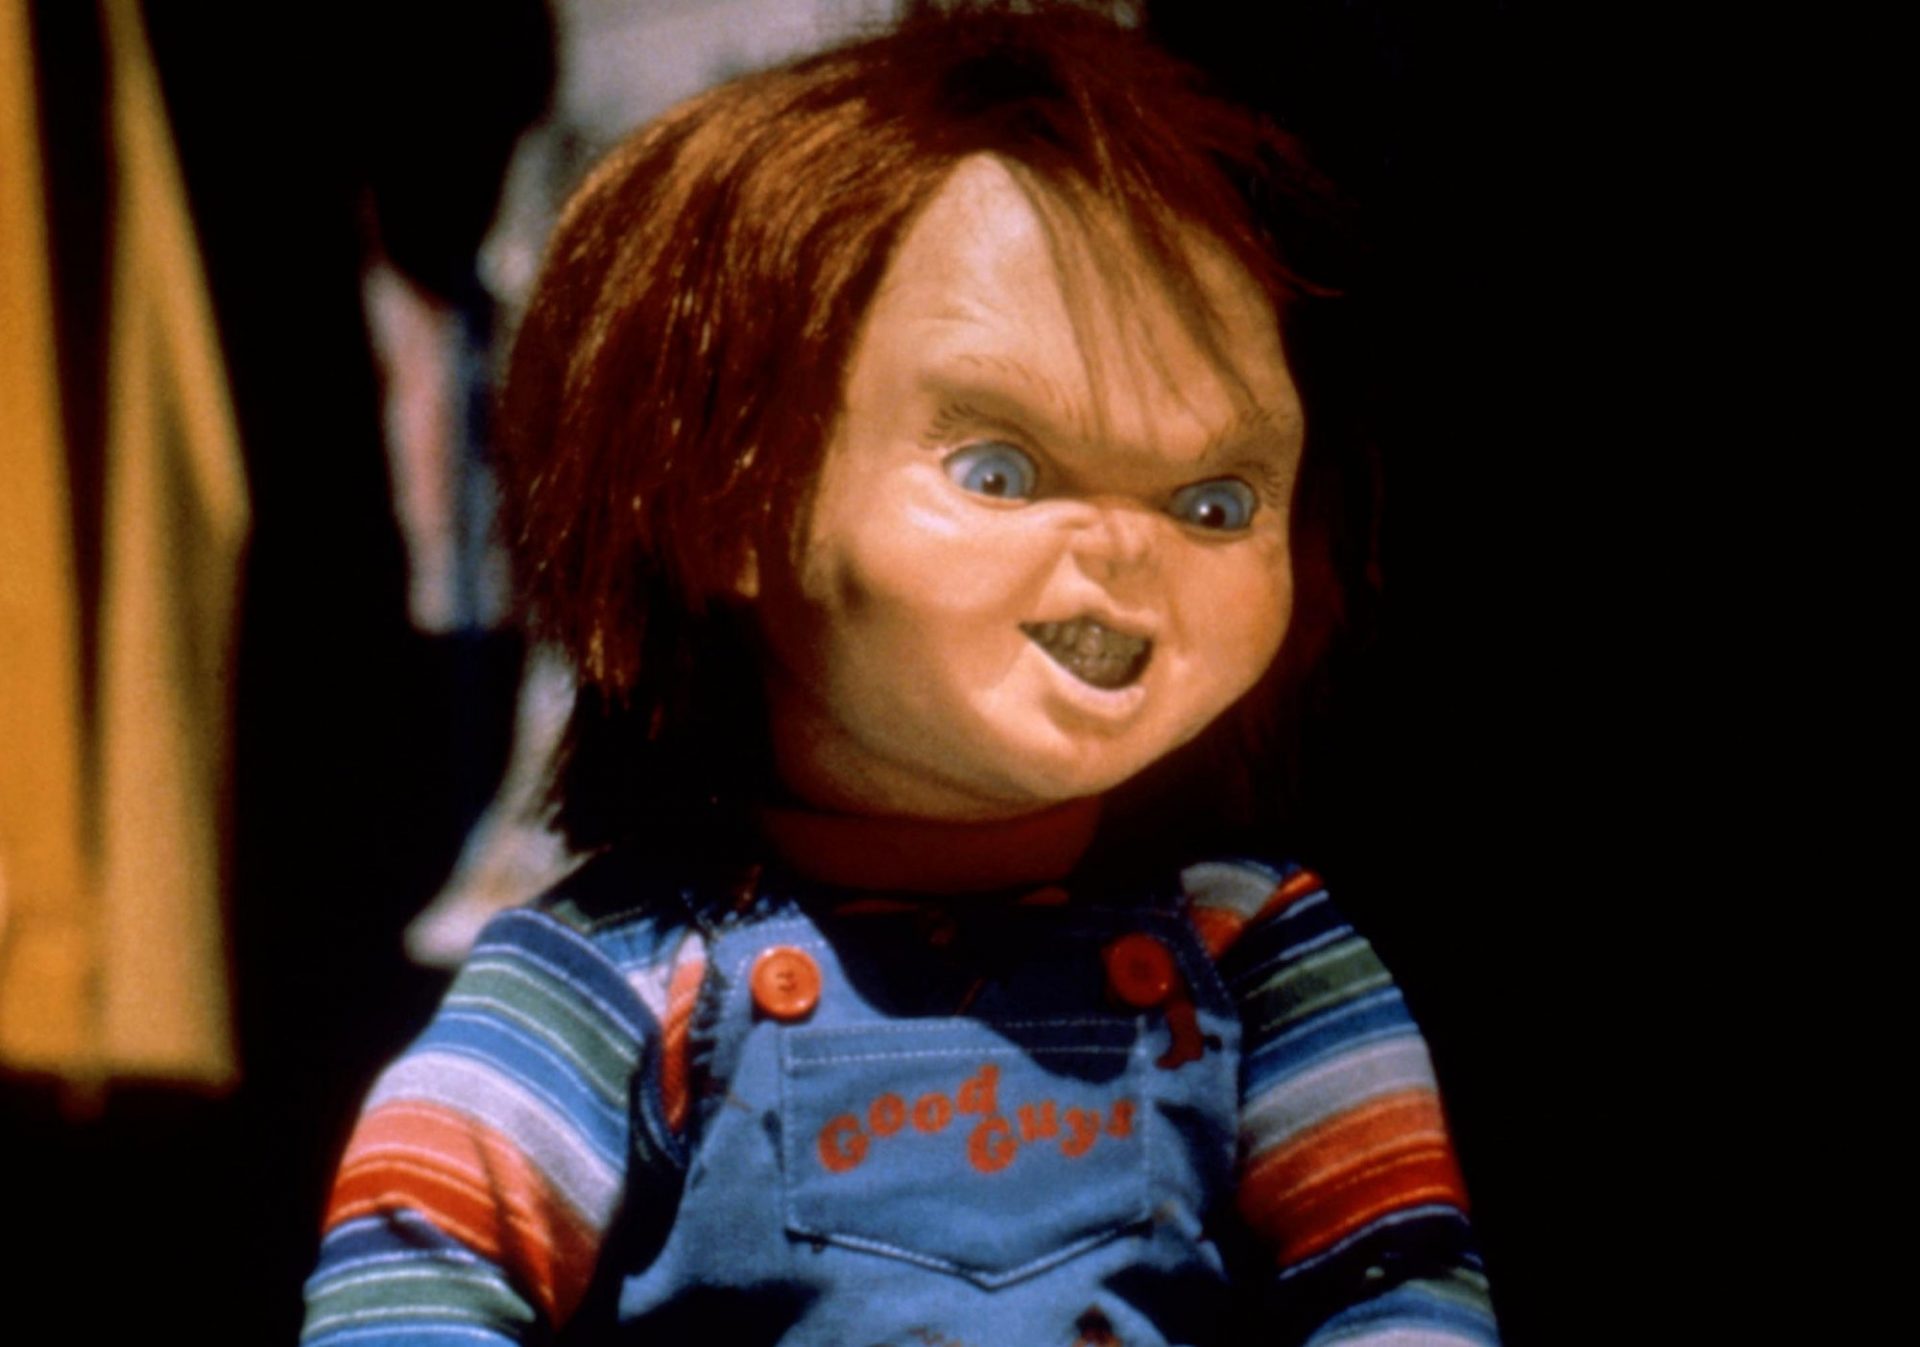 A creepy doll, Chucky, scowling